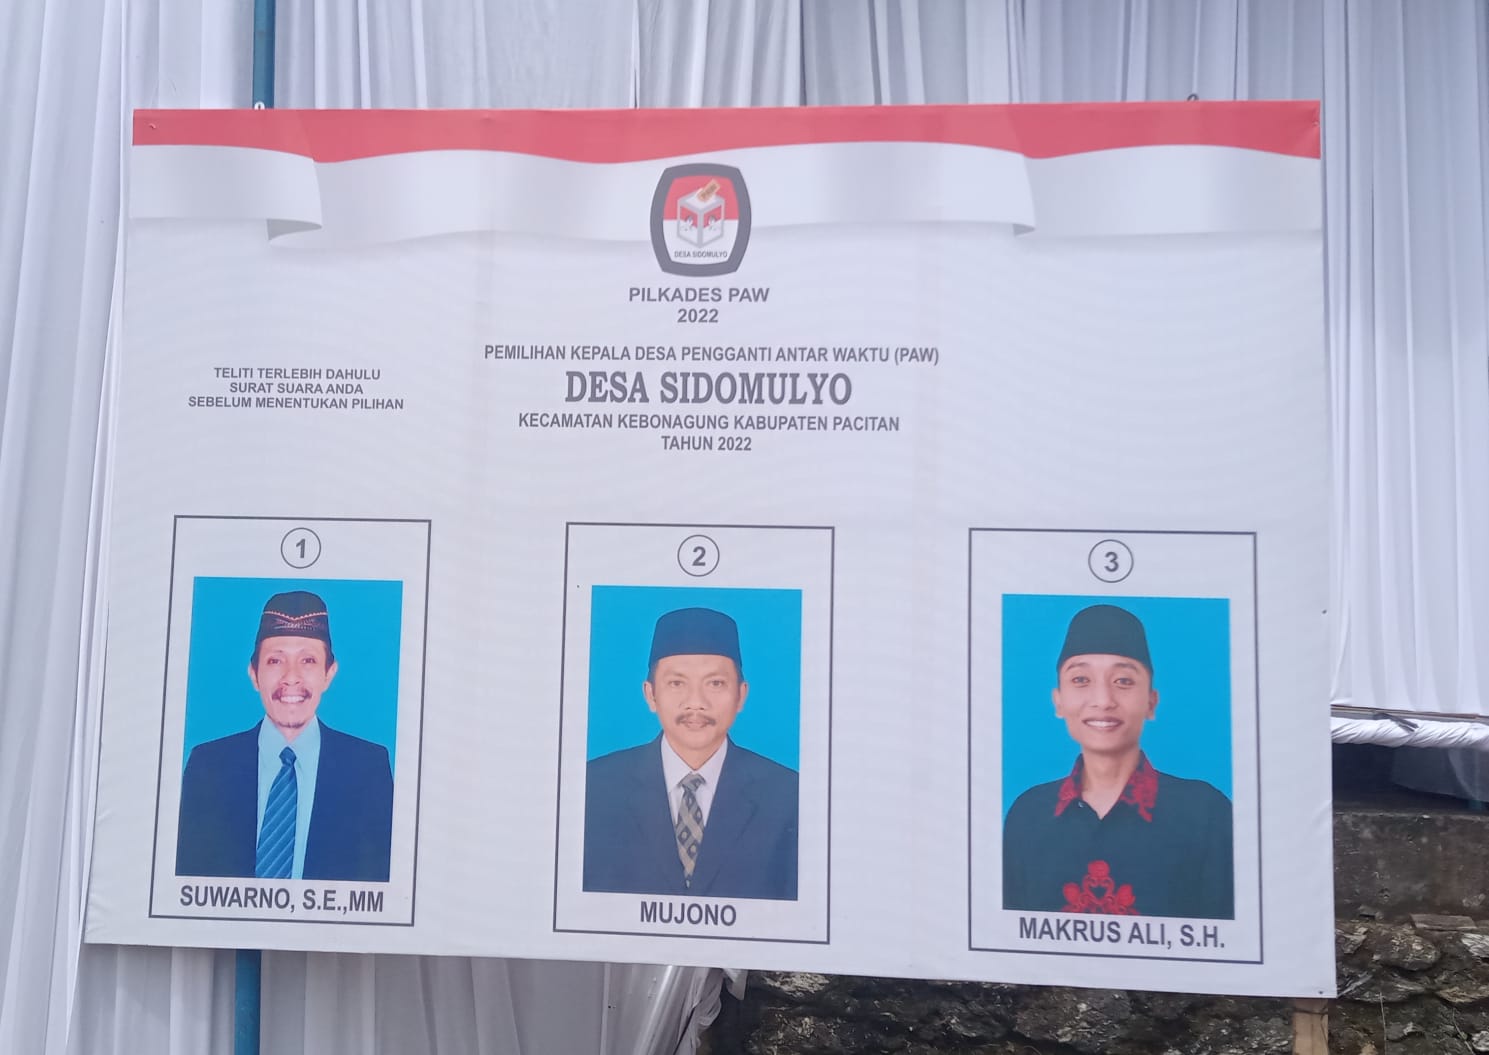 Gambar calon kades PAW desa Sidomulyo kecamatan Kebonagung Kabupaten Pacitan